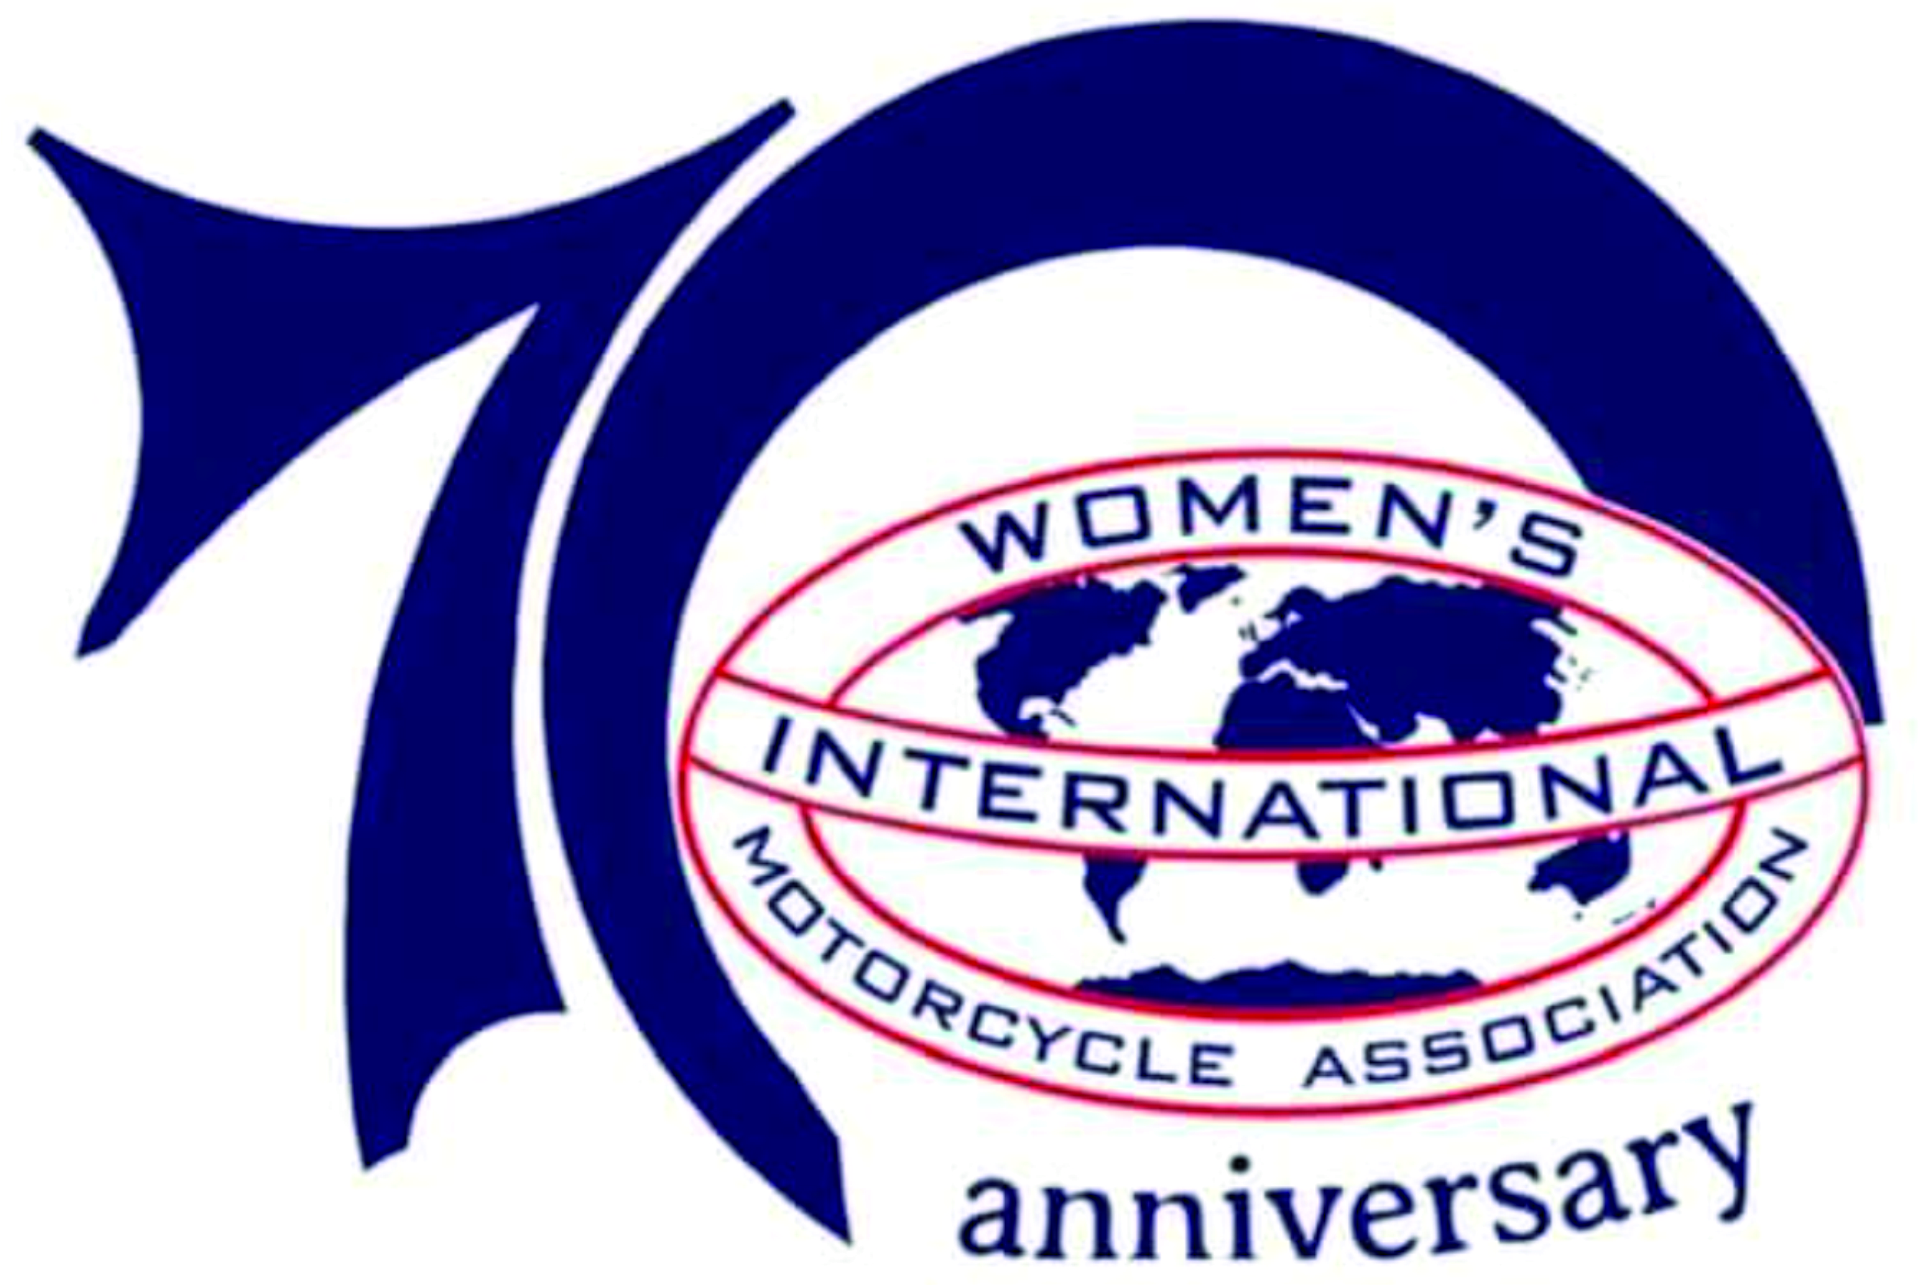 WIMA, Women’s International Motorcycle Association